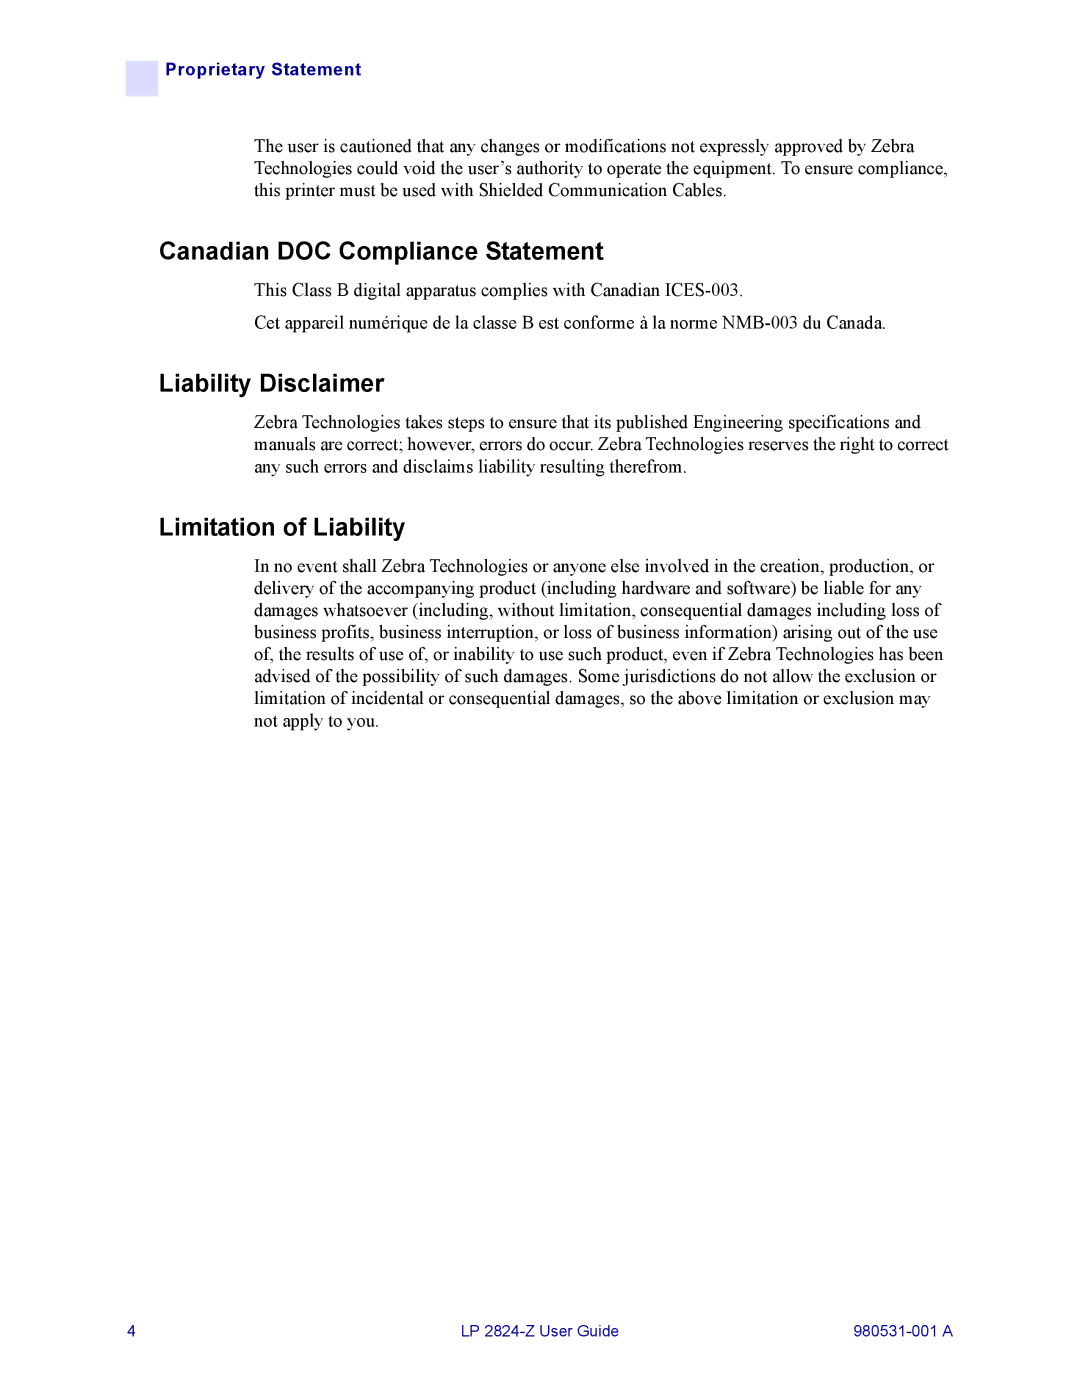 Zebra Technologies H 2824-Z user manual Canadian DOC Compliance Statement, Liability Disclaimer, Limitation of Liability 